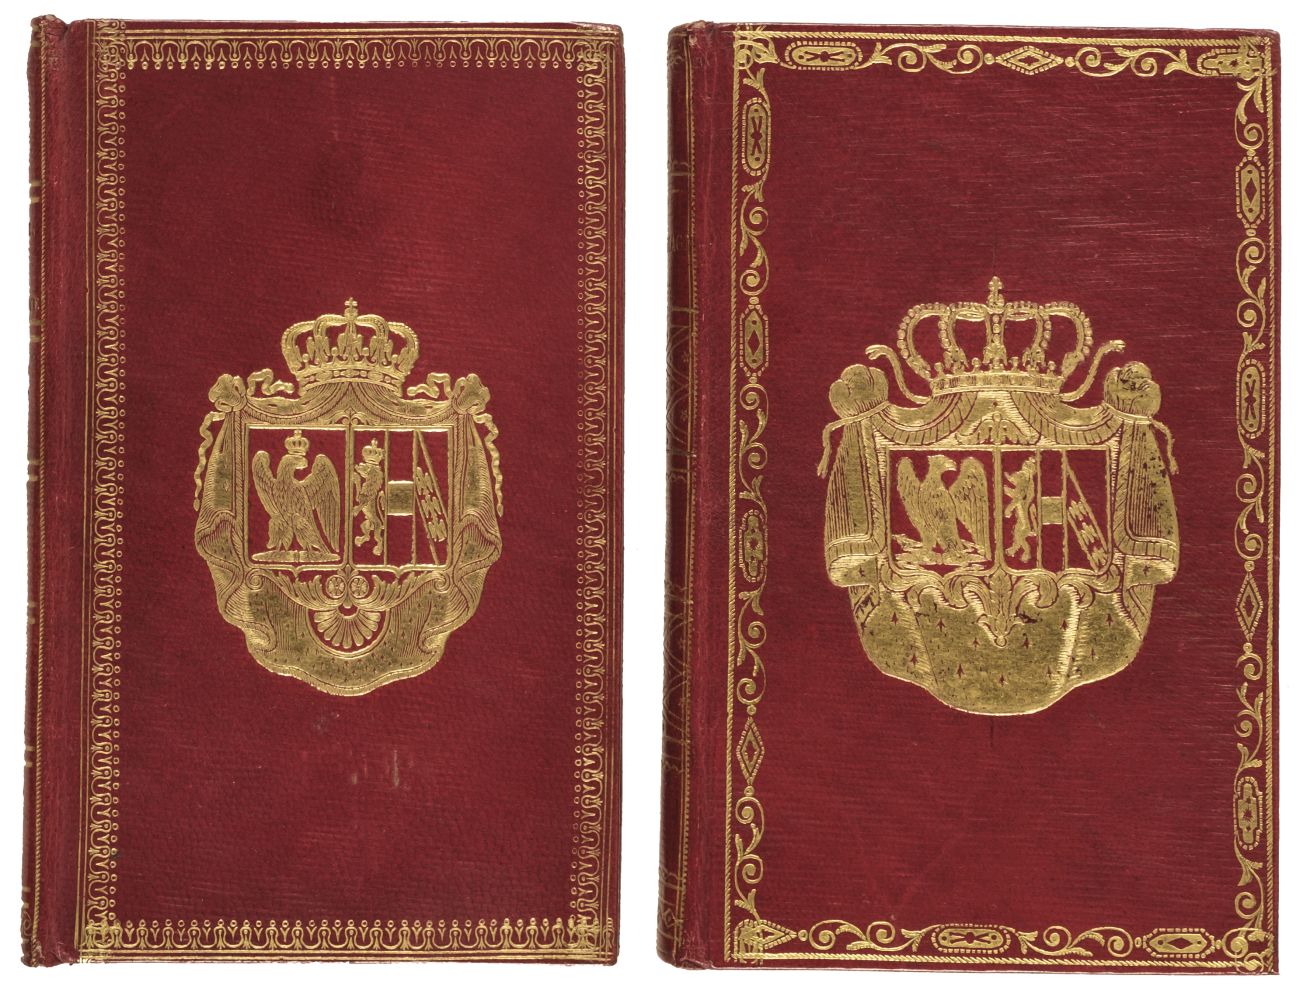 Bindings for Empress Marie Louise. Charles Millevoye, Charlemagne, 2 volumes, 1812 & 1814